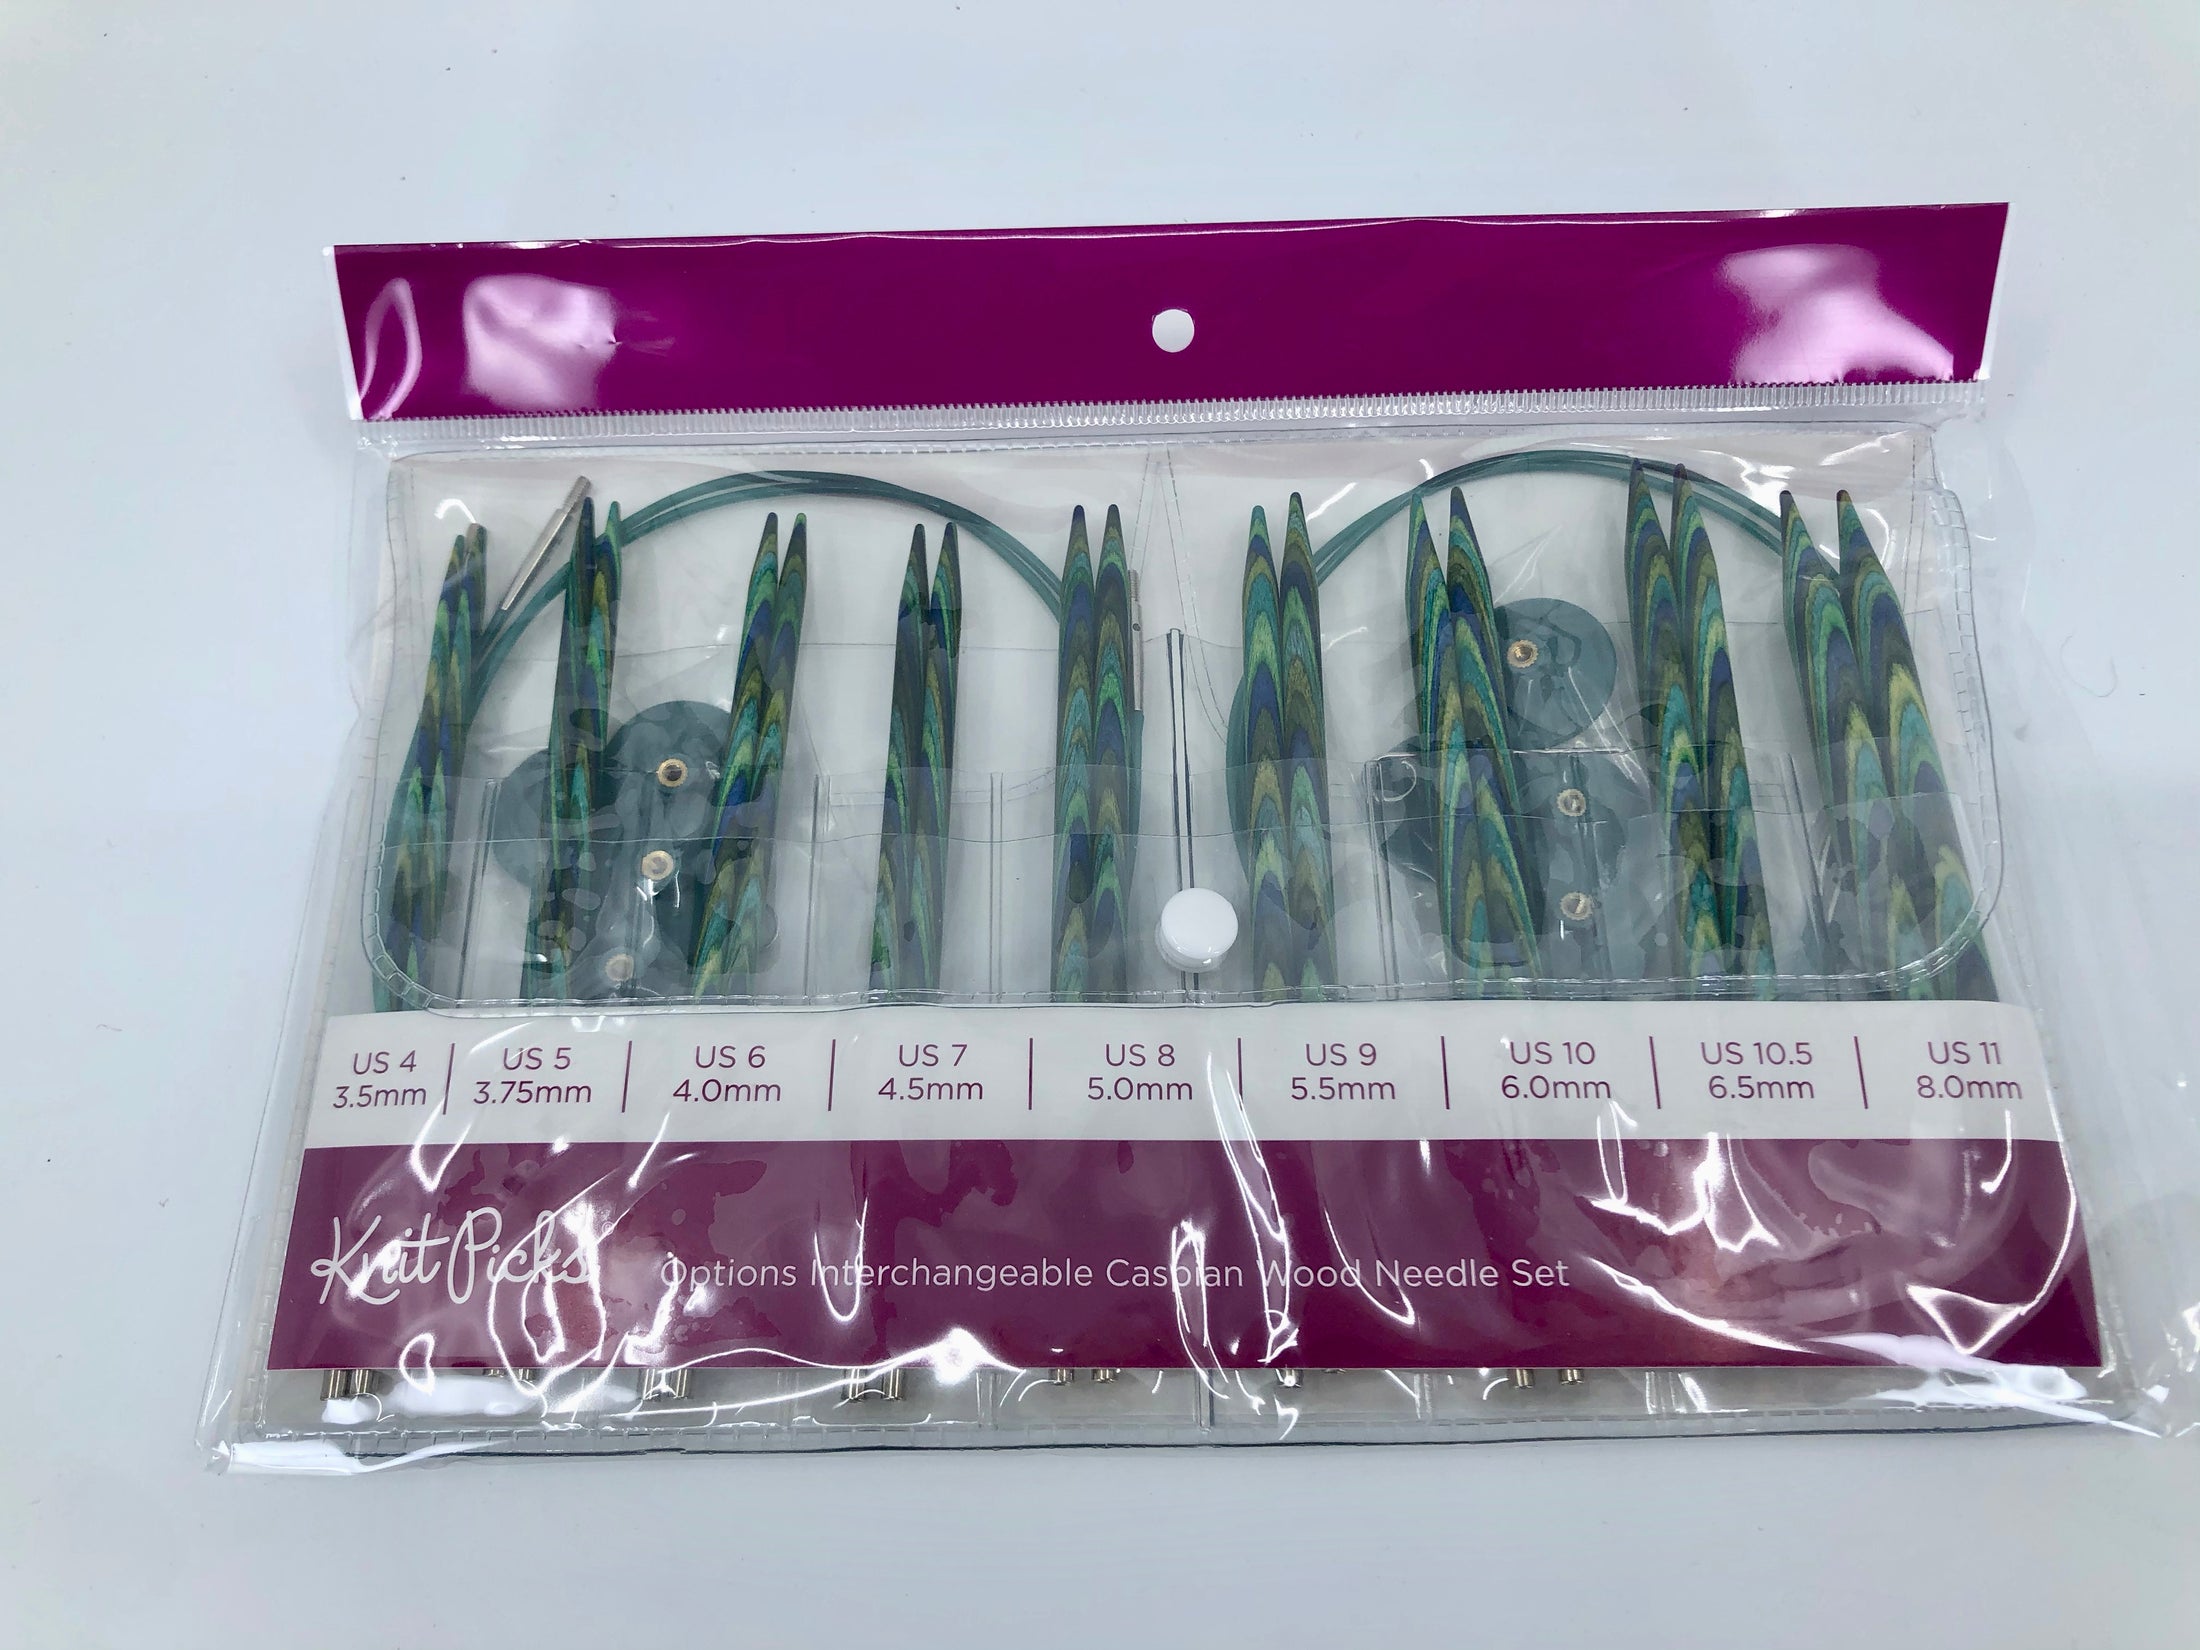 Knitpicks Interchangeable Needles